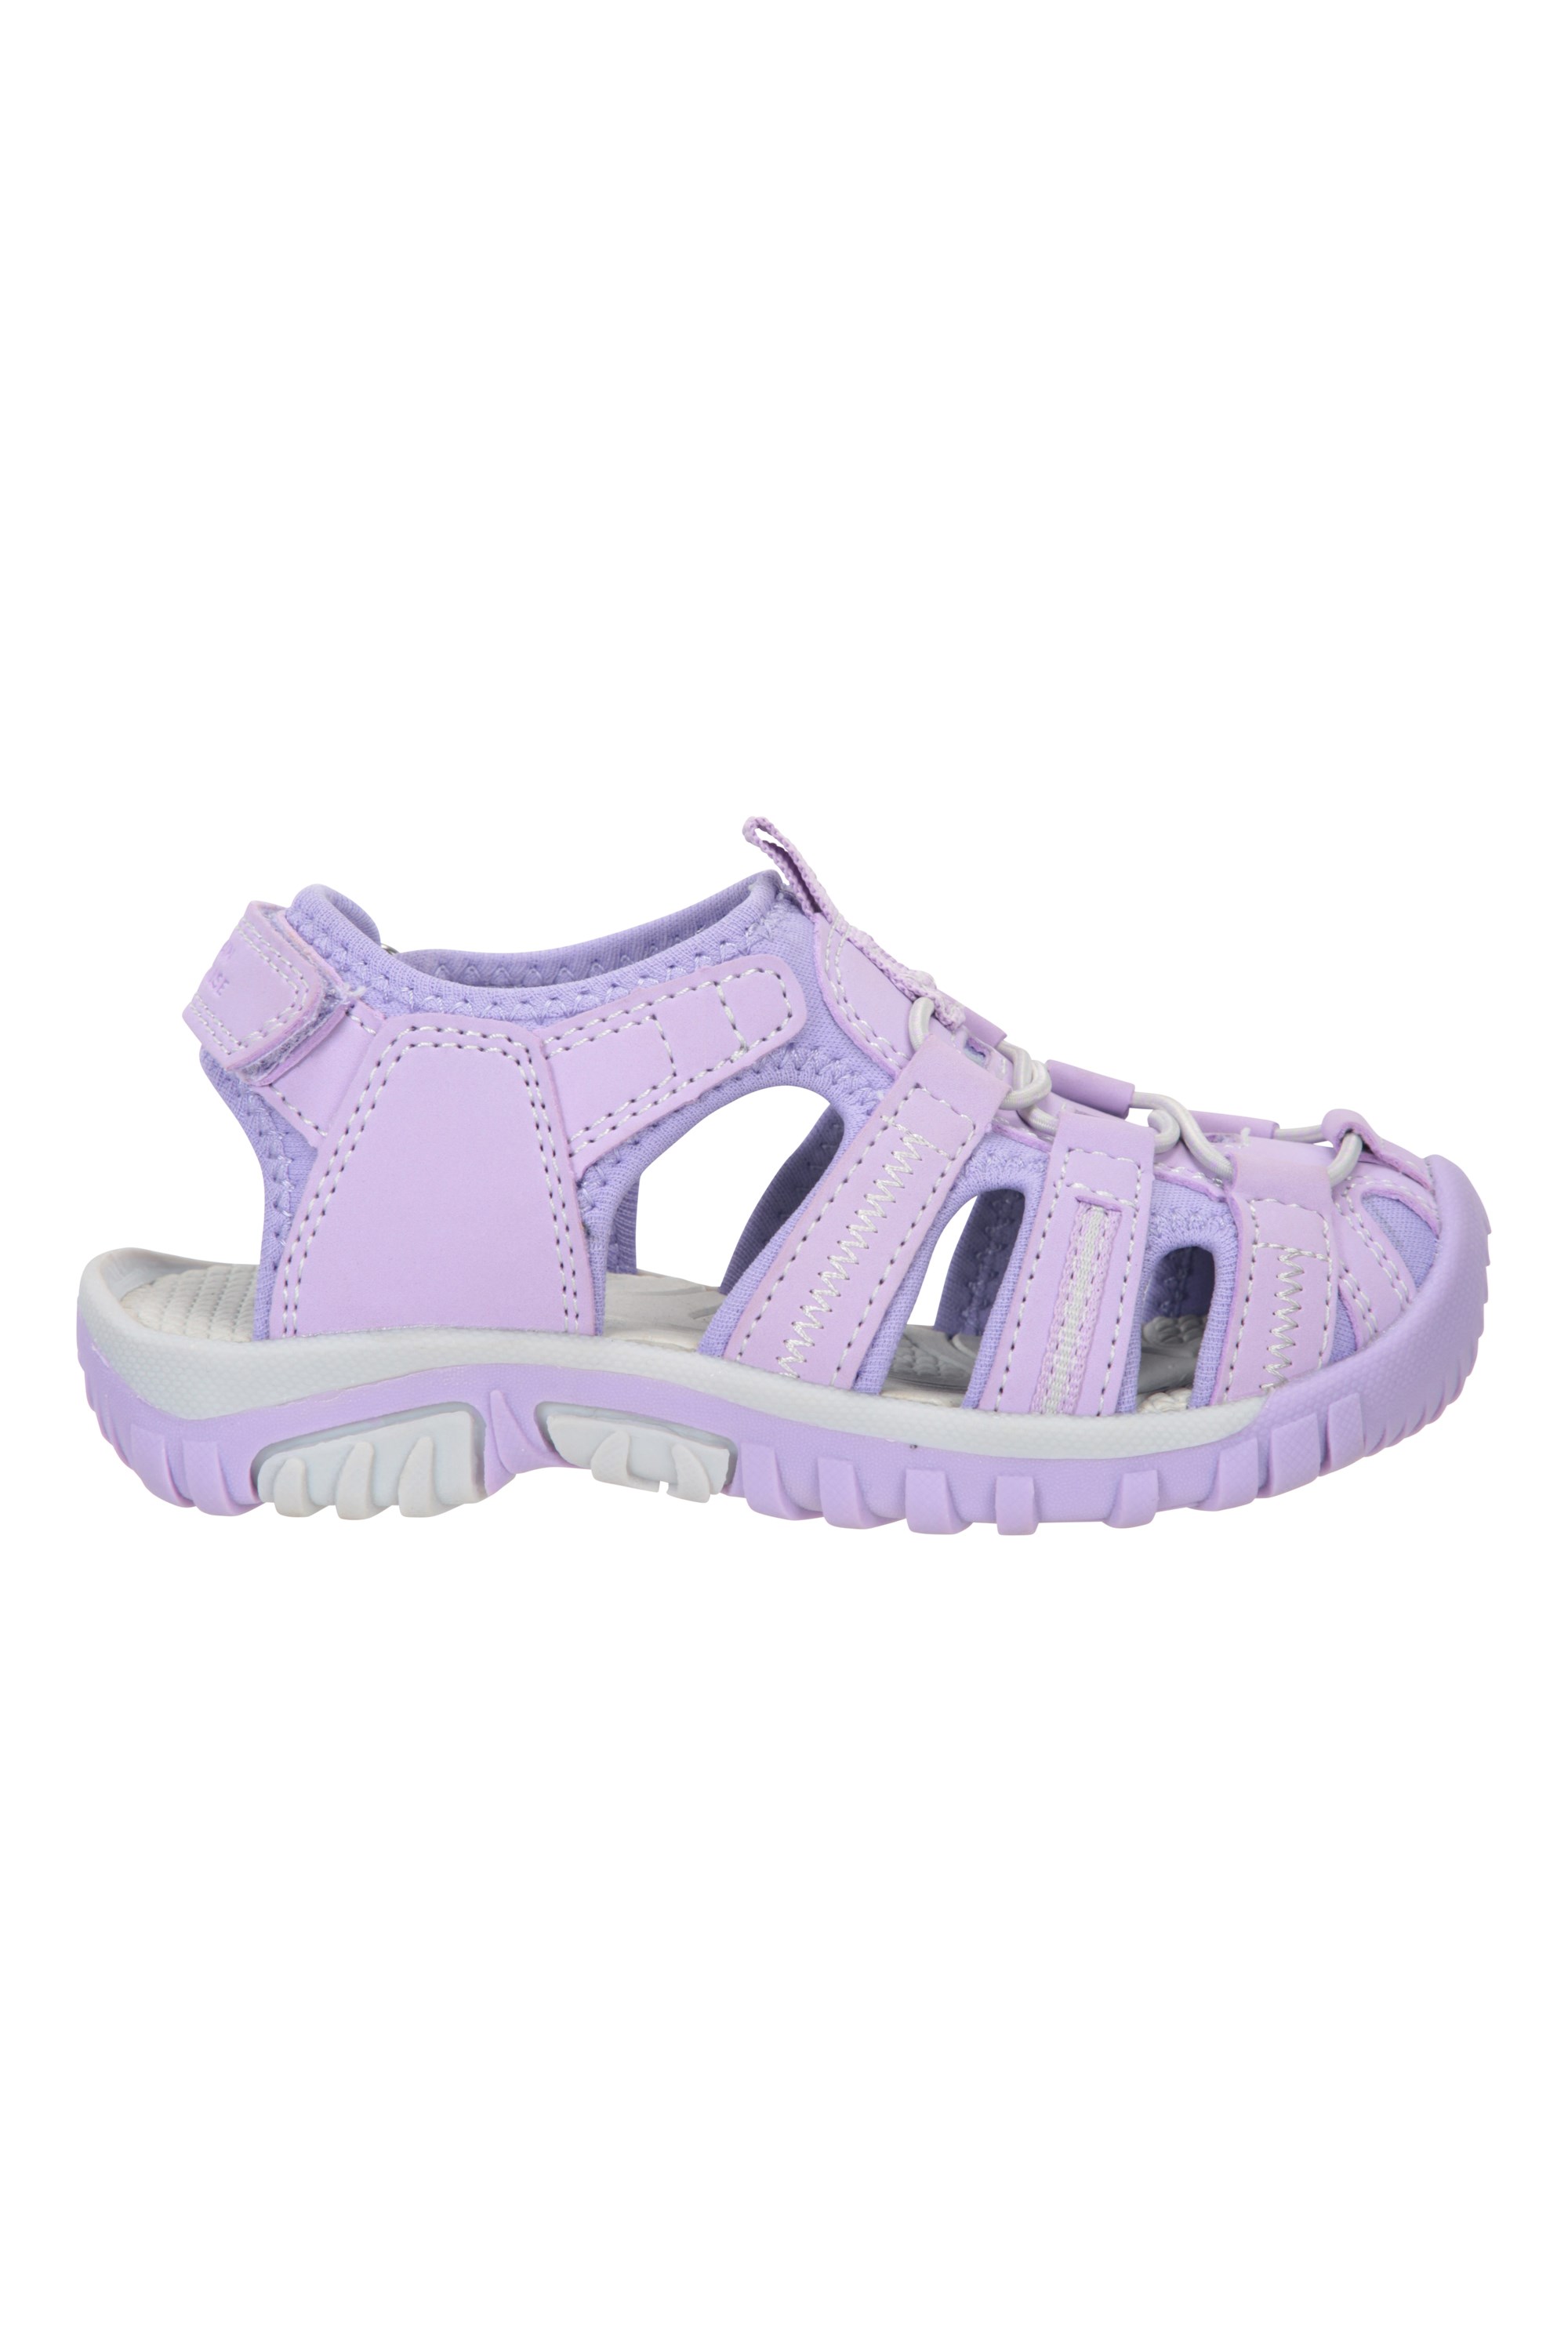 MW Girls Pink Purple Bay Junior Shandals Summer Sandals Beach Shoes 